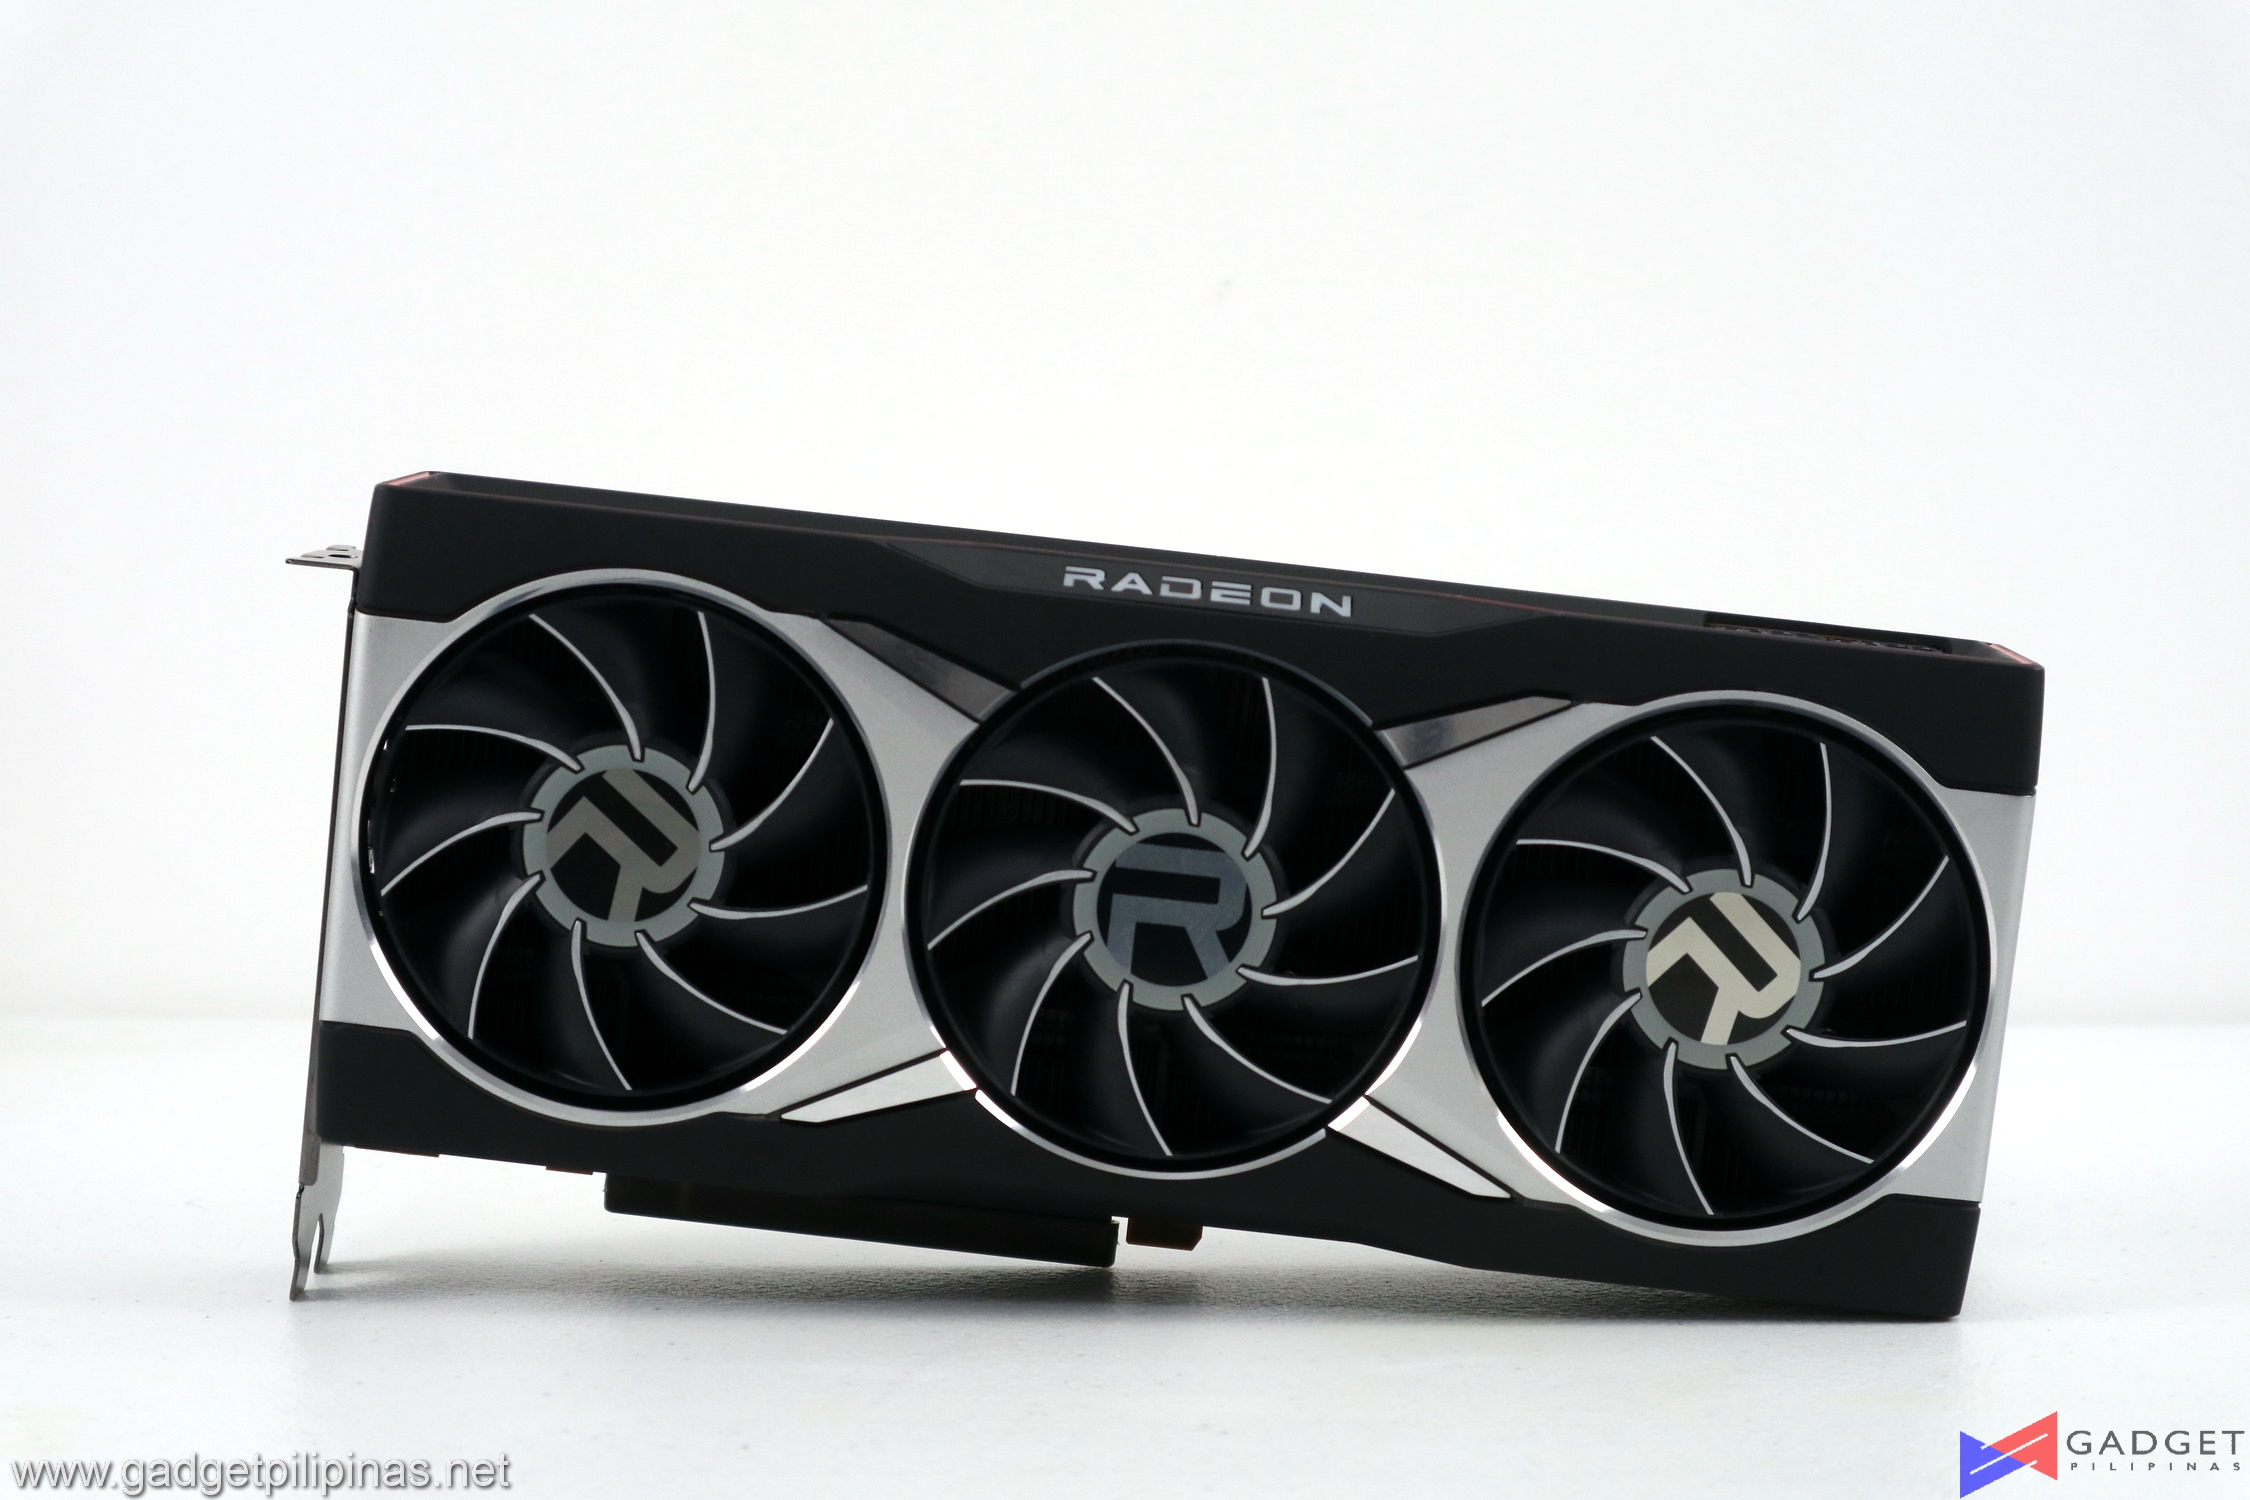 AMD Radeon RX 6800 XT Review - 6800XT